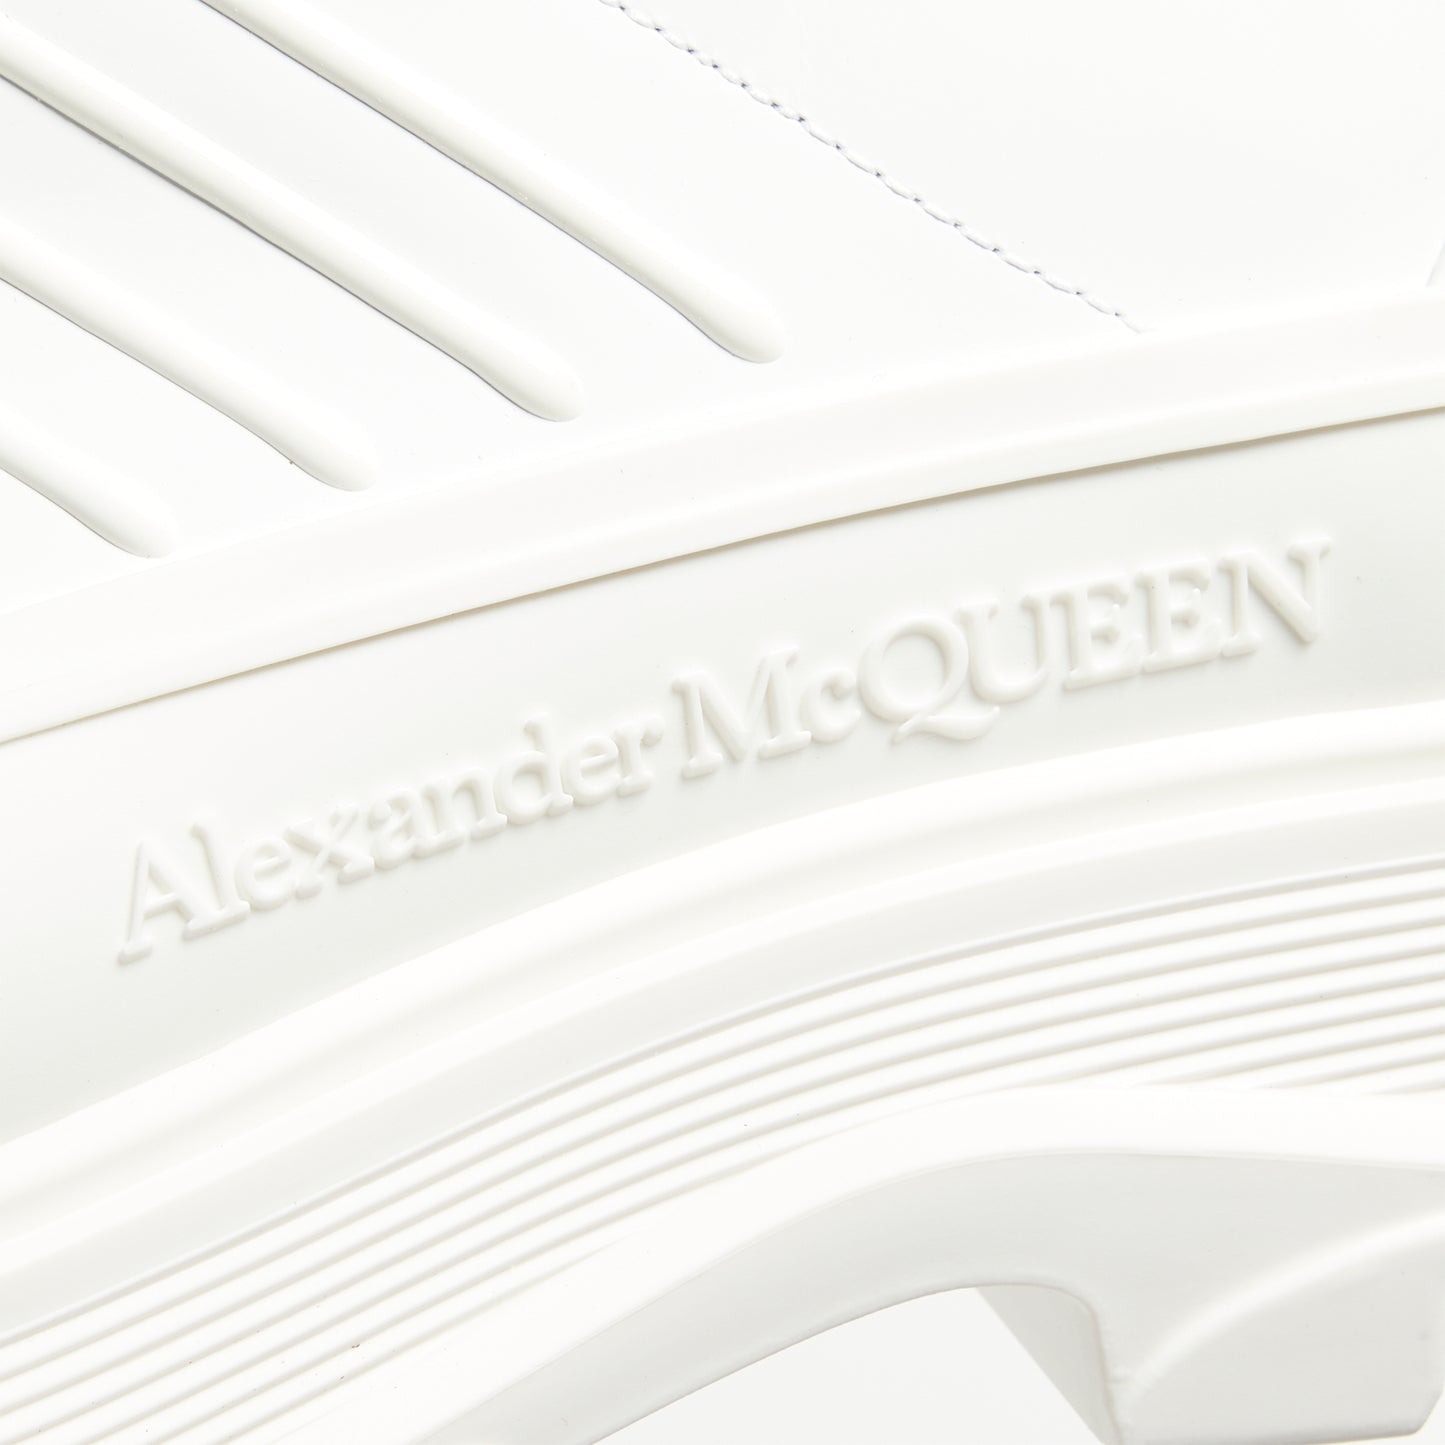 Alexander McQueen Tread Slick Zip Up (White/Off White)